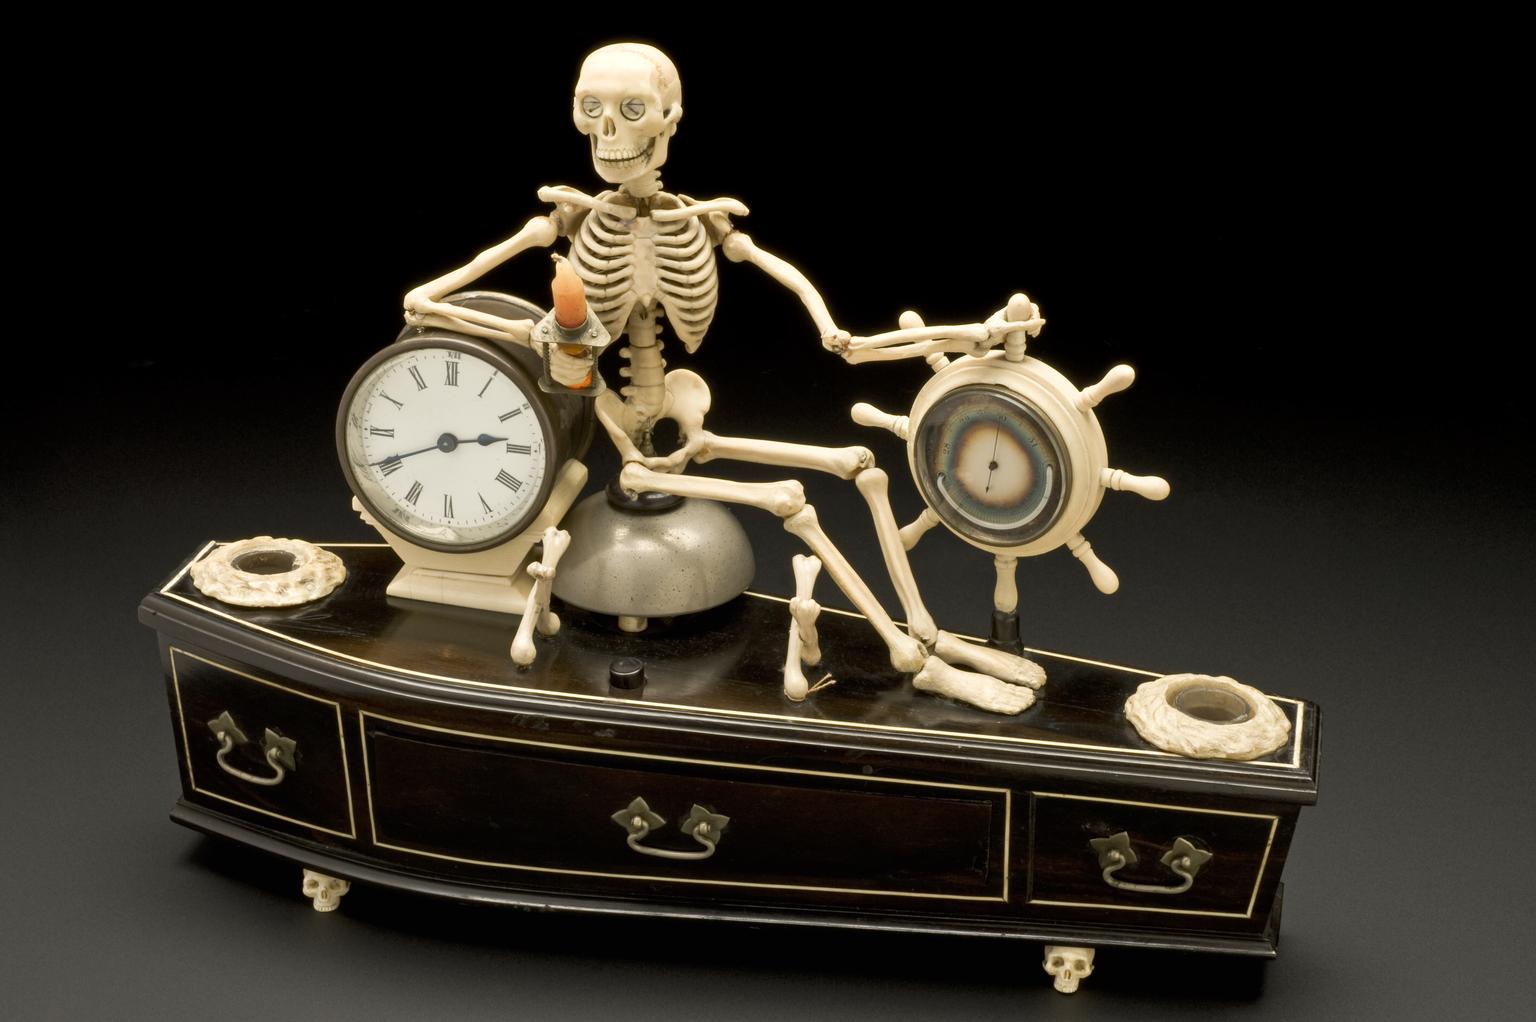 File:Alarm clock, mounted on model of coffin.jpg - Wikipedia